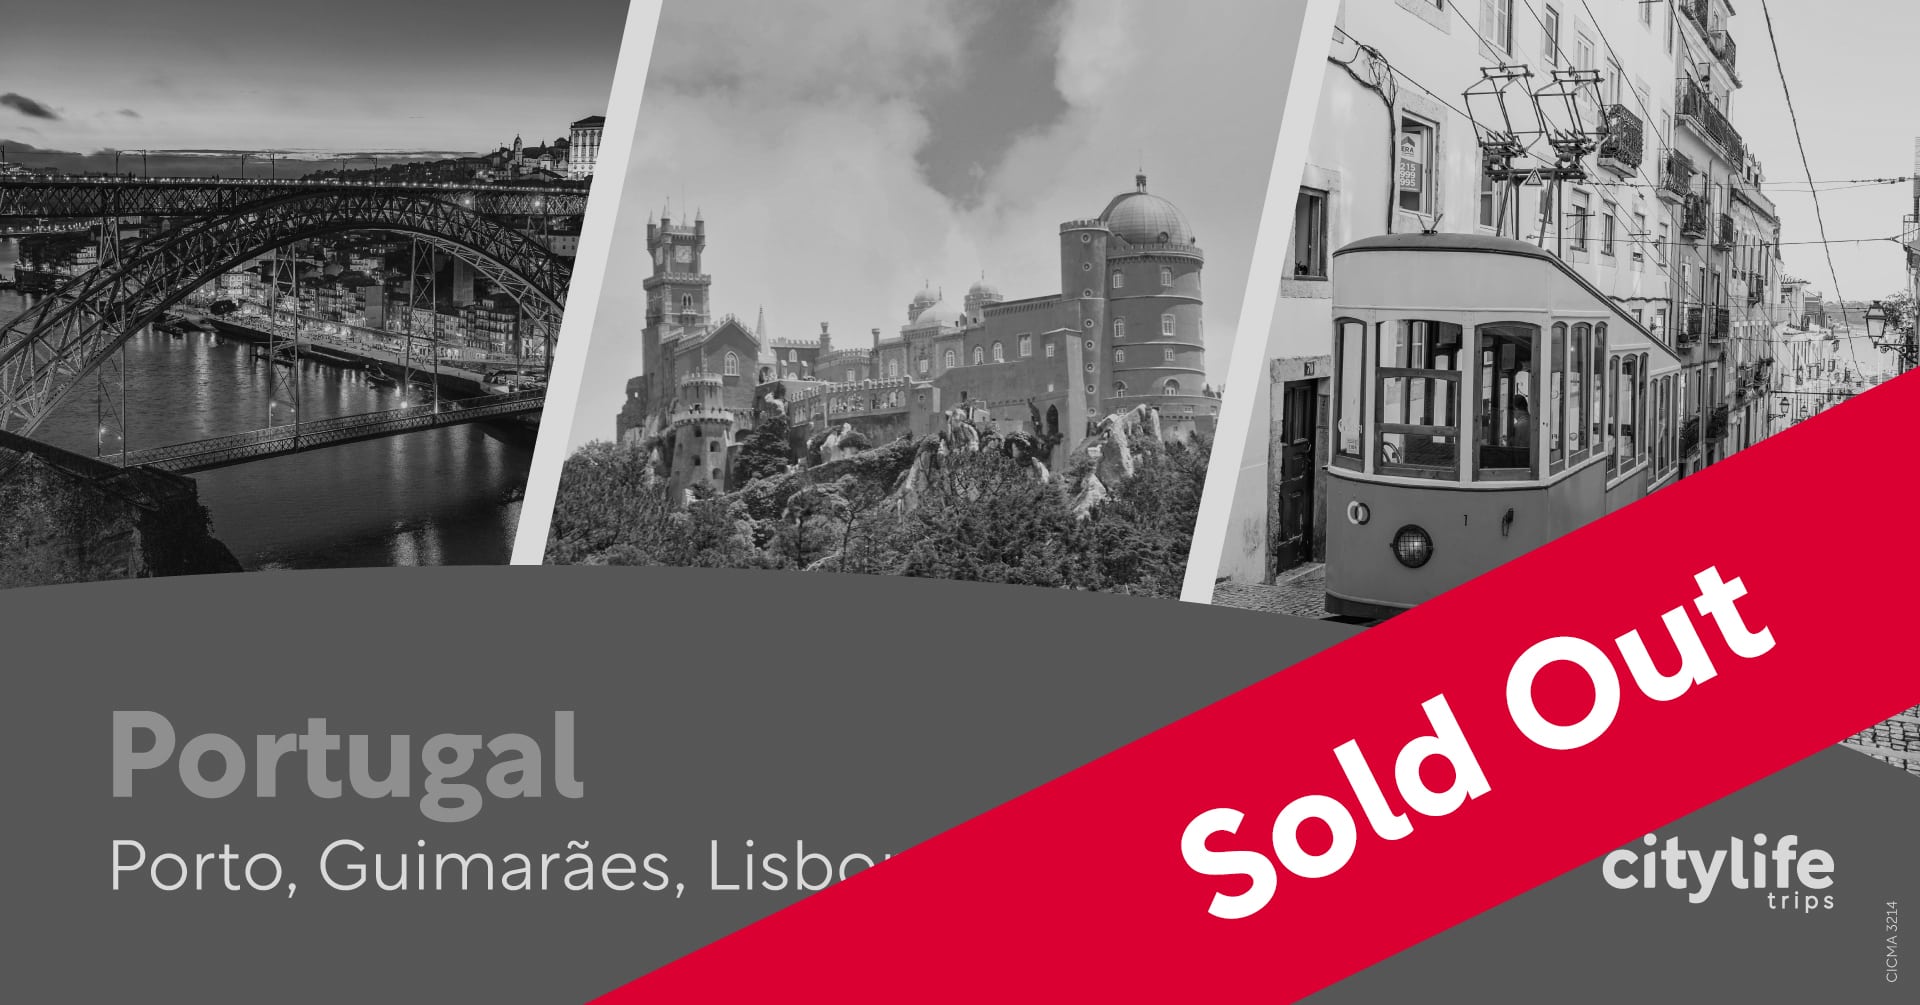 sold-out-fb-event-long-portugal-porto-lisbon-guimaraes-sintra